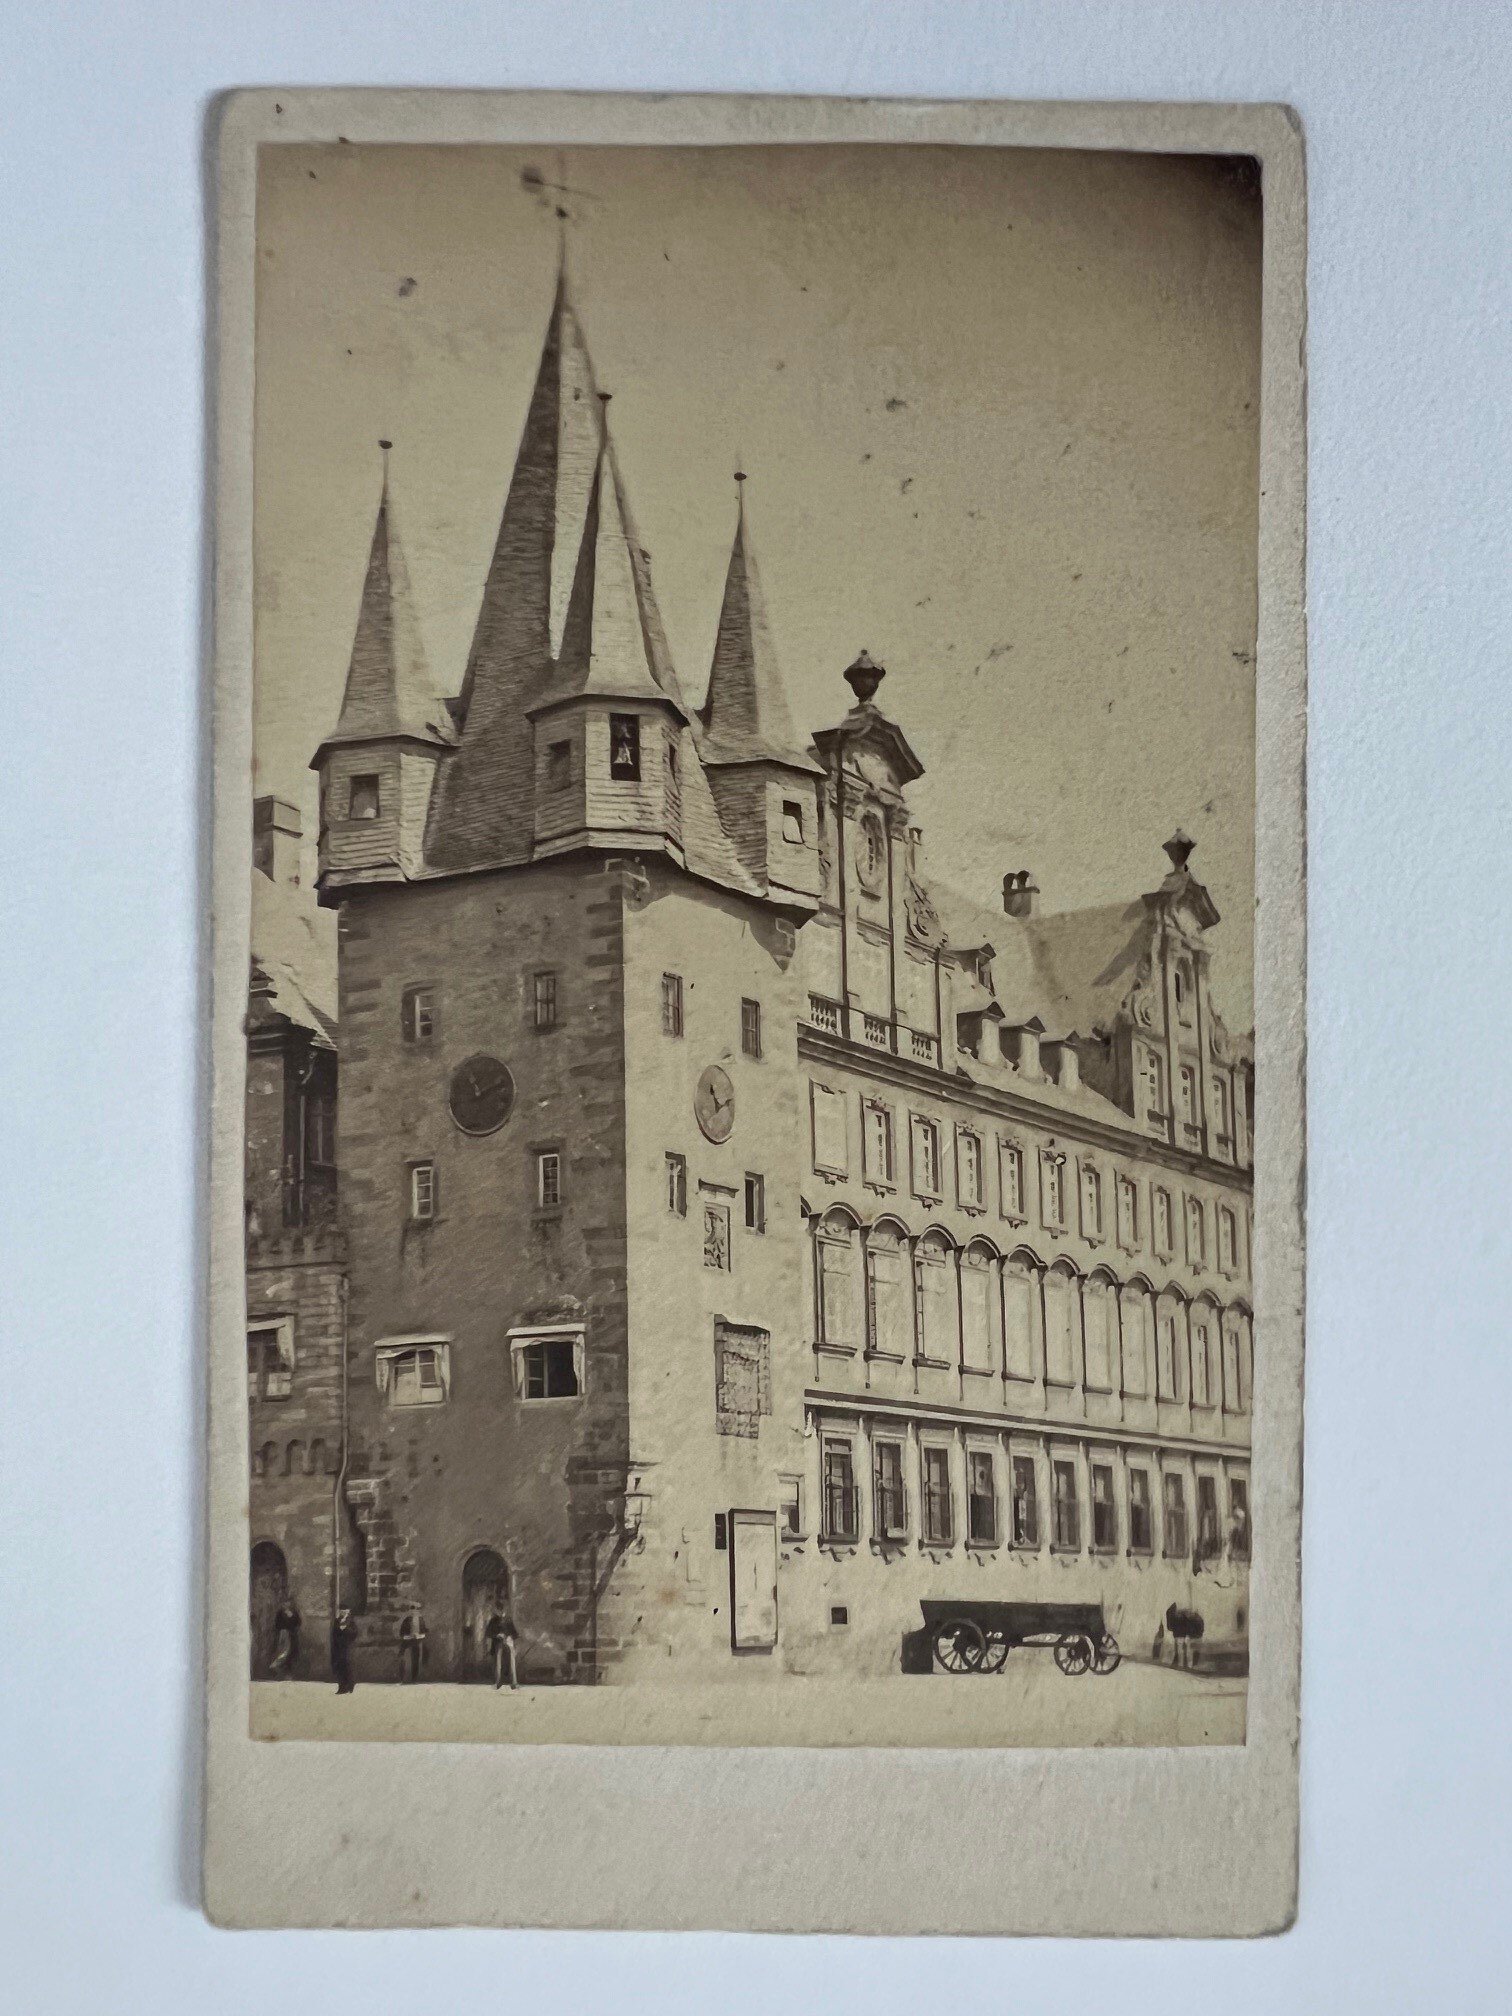 CdV, Theodor Creifelds, Frankfurt, Nr. 278, Rententhurm, ca. 1870. (Taunus-Rhein-Main - Regionalgeschichtliche Sammlung Dr. Stefan Naas CC BY-NC-SA)